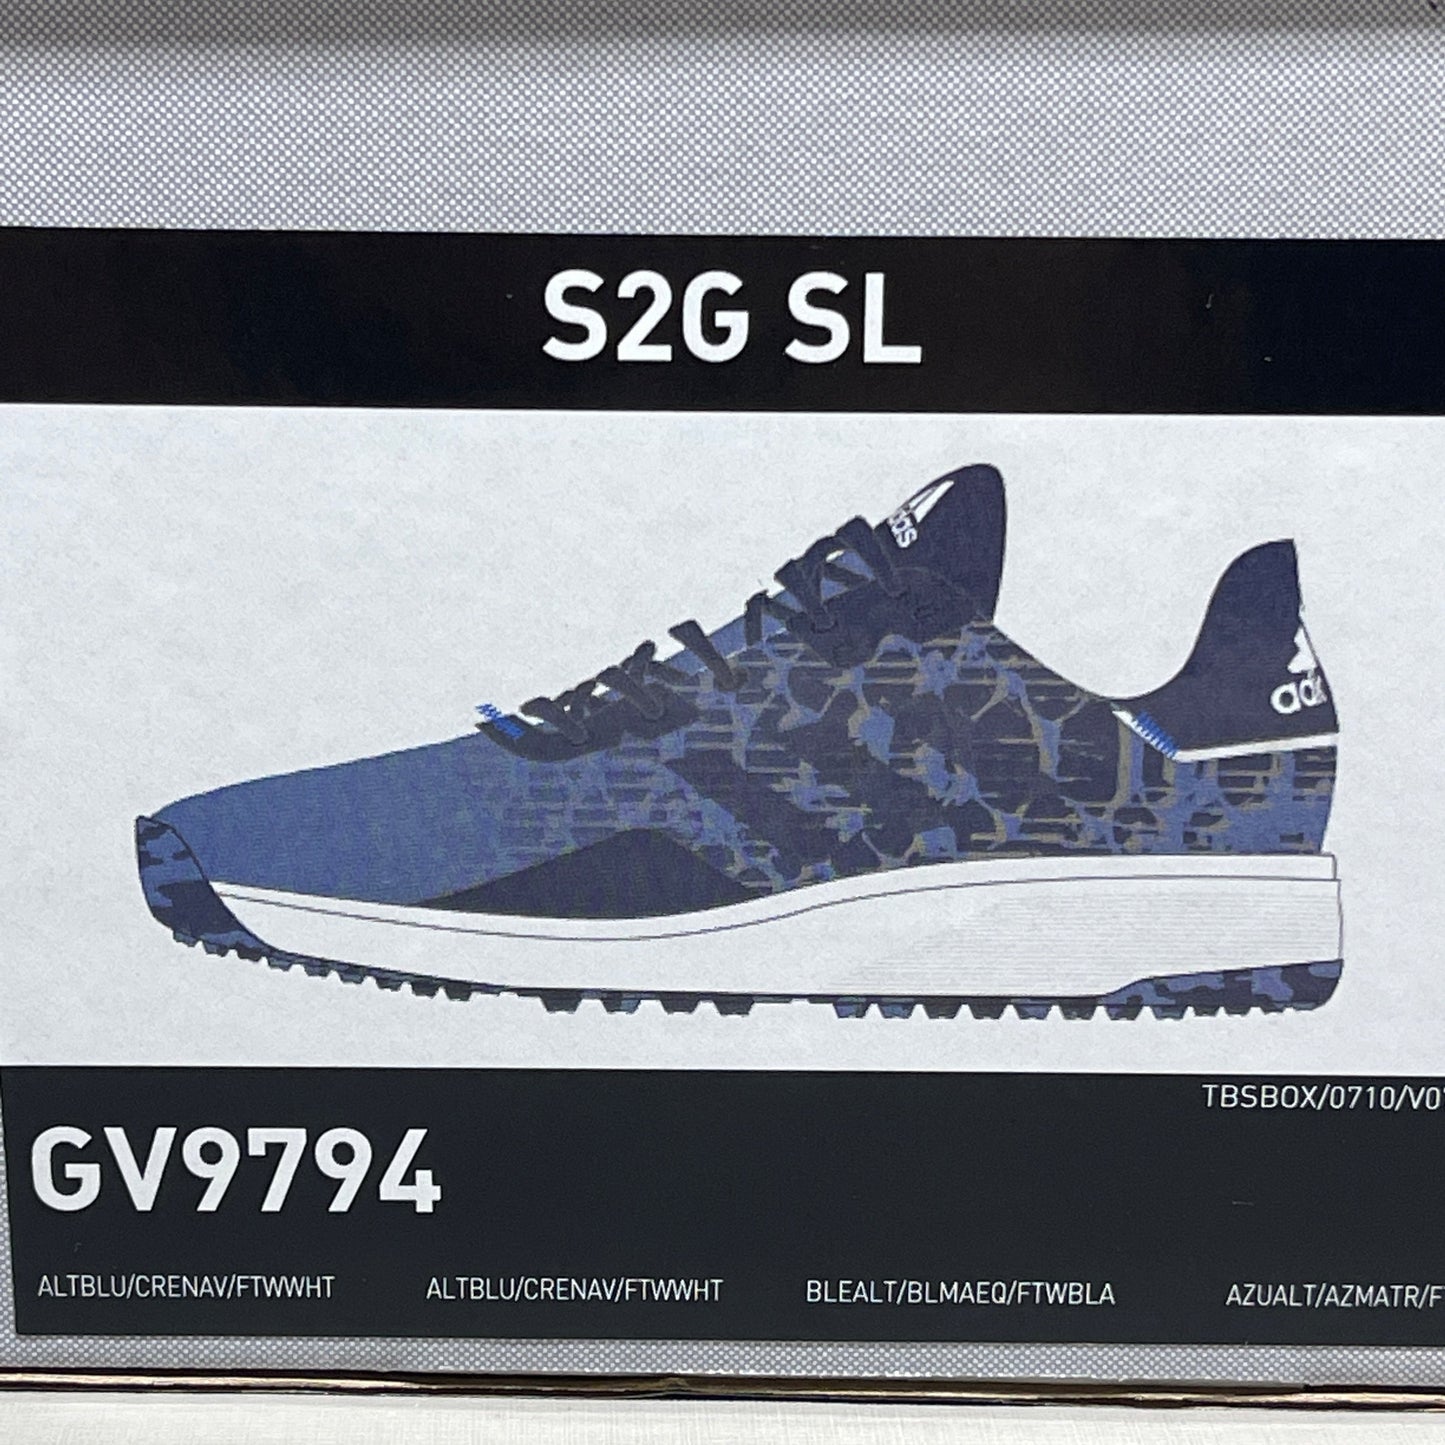 ADIDAS Golf Shoes S2G SL Waterproof Men's Sz 11.5 Blue / Navy / White GV9794 (New)